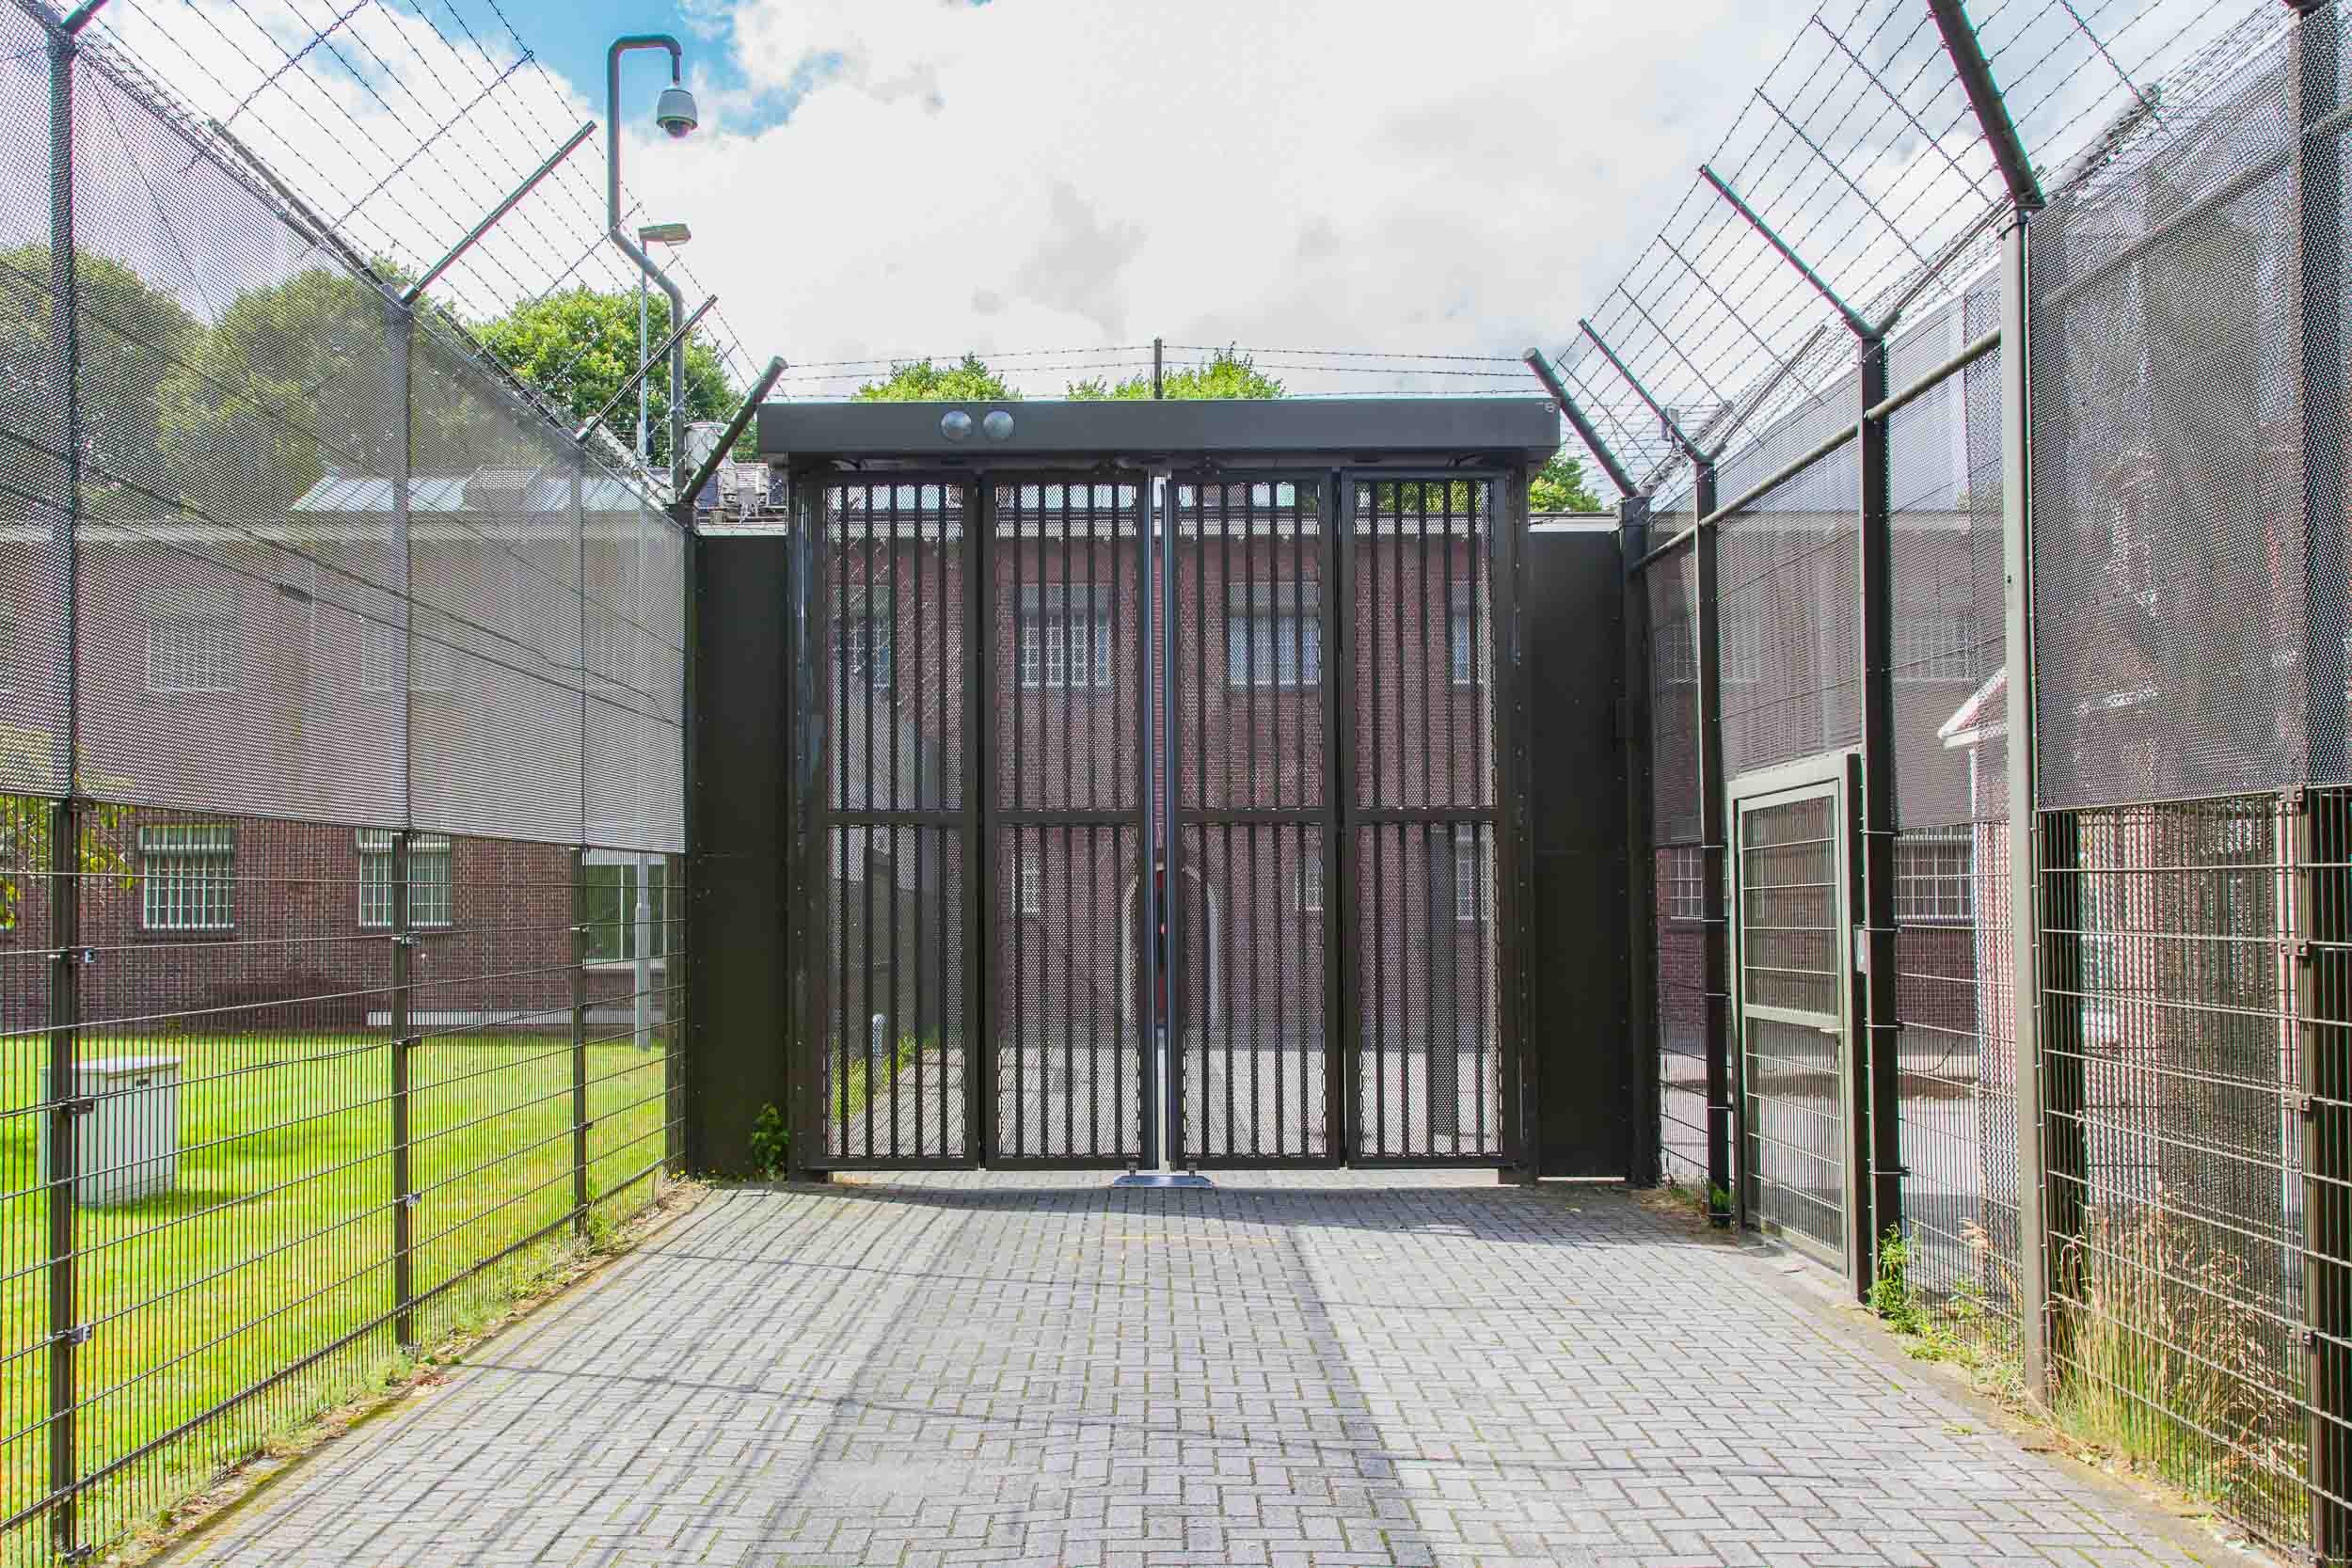 Prison Gate, Life After Prison